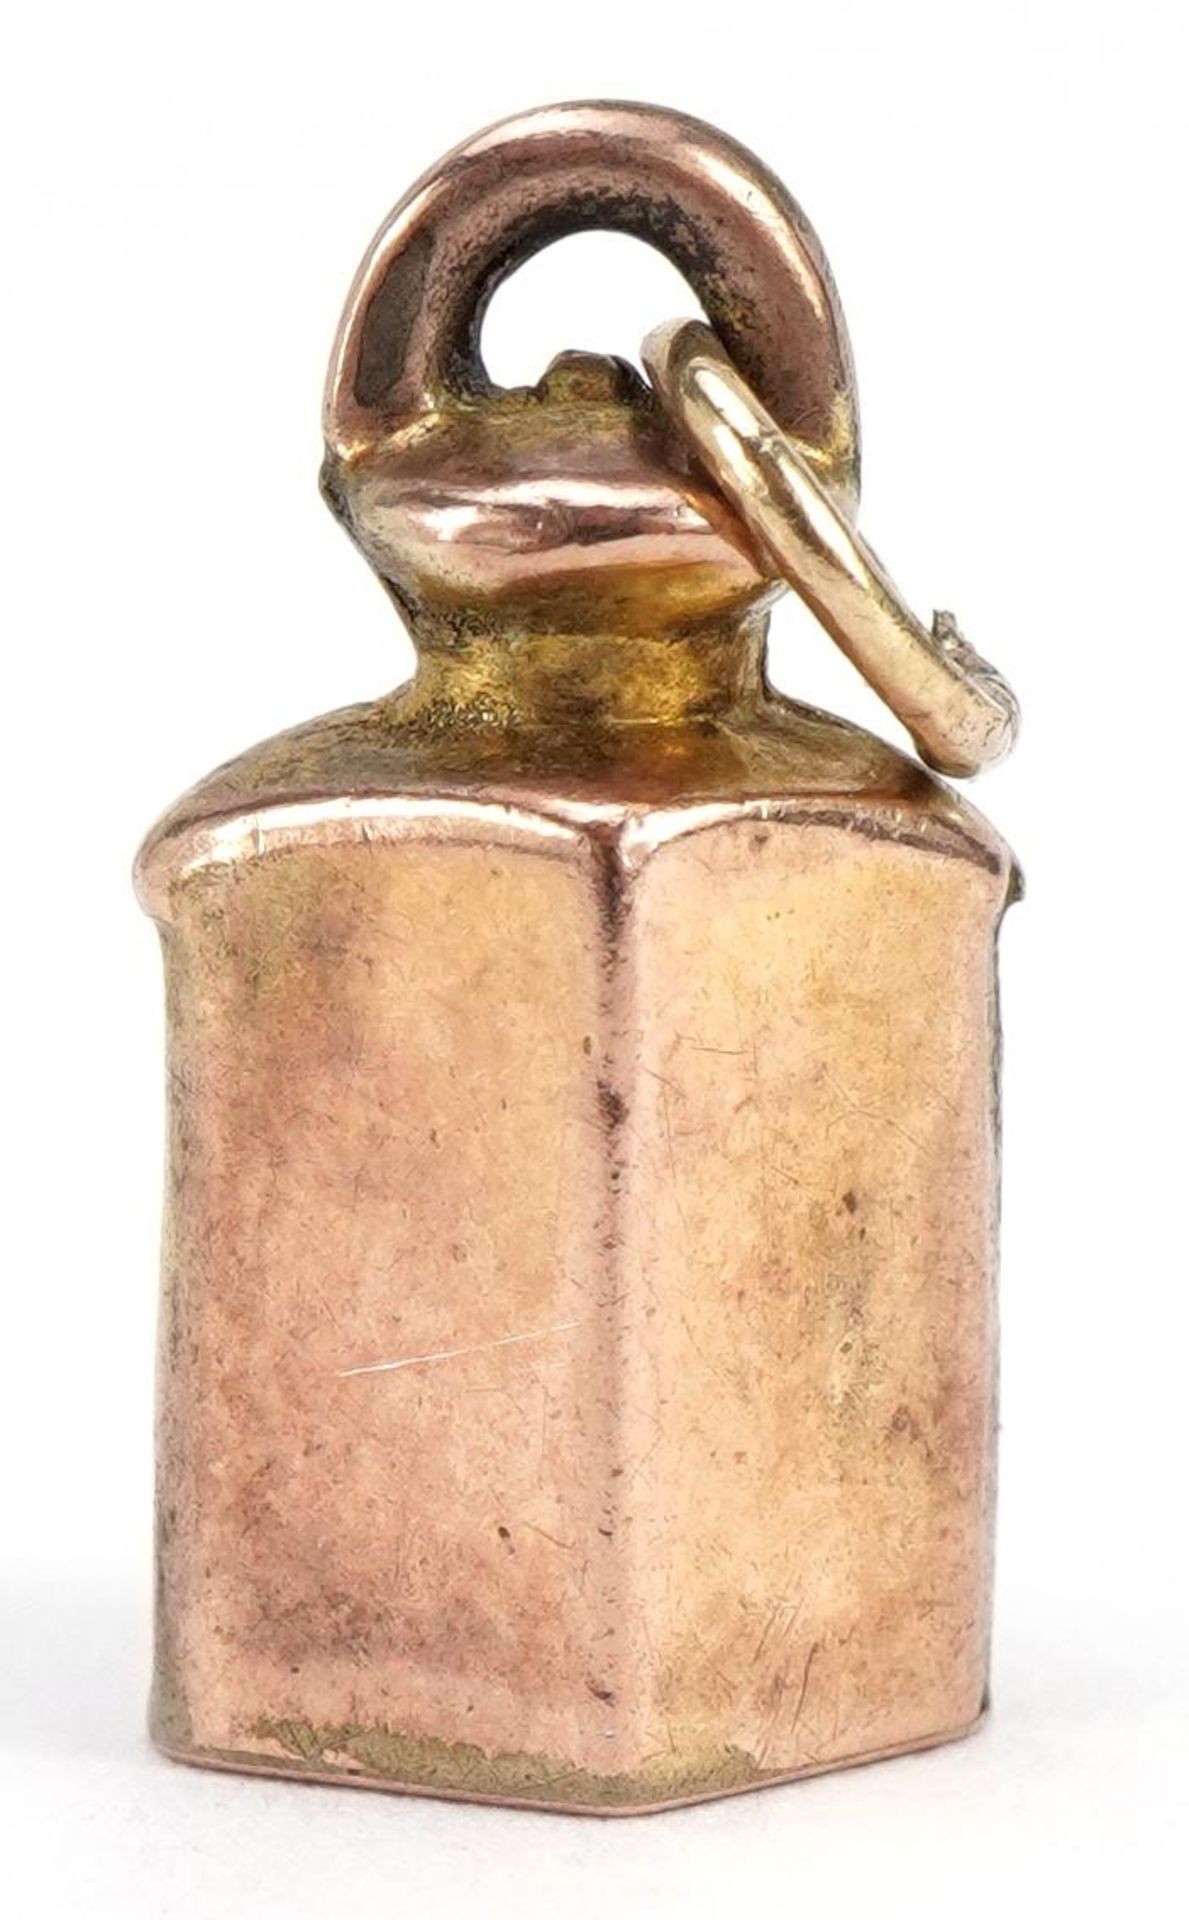 9ct rose gold starboard ship's lantern charm, 1.6cm high, 1.4g - Image 2 of 3